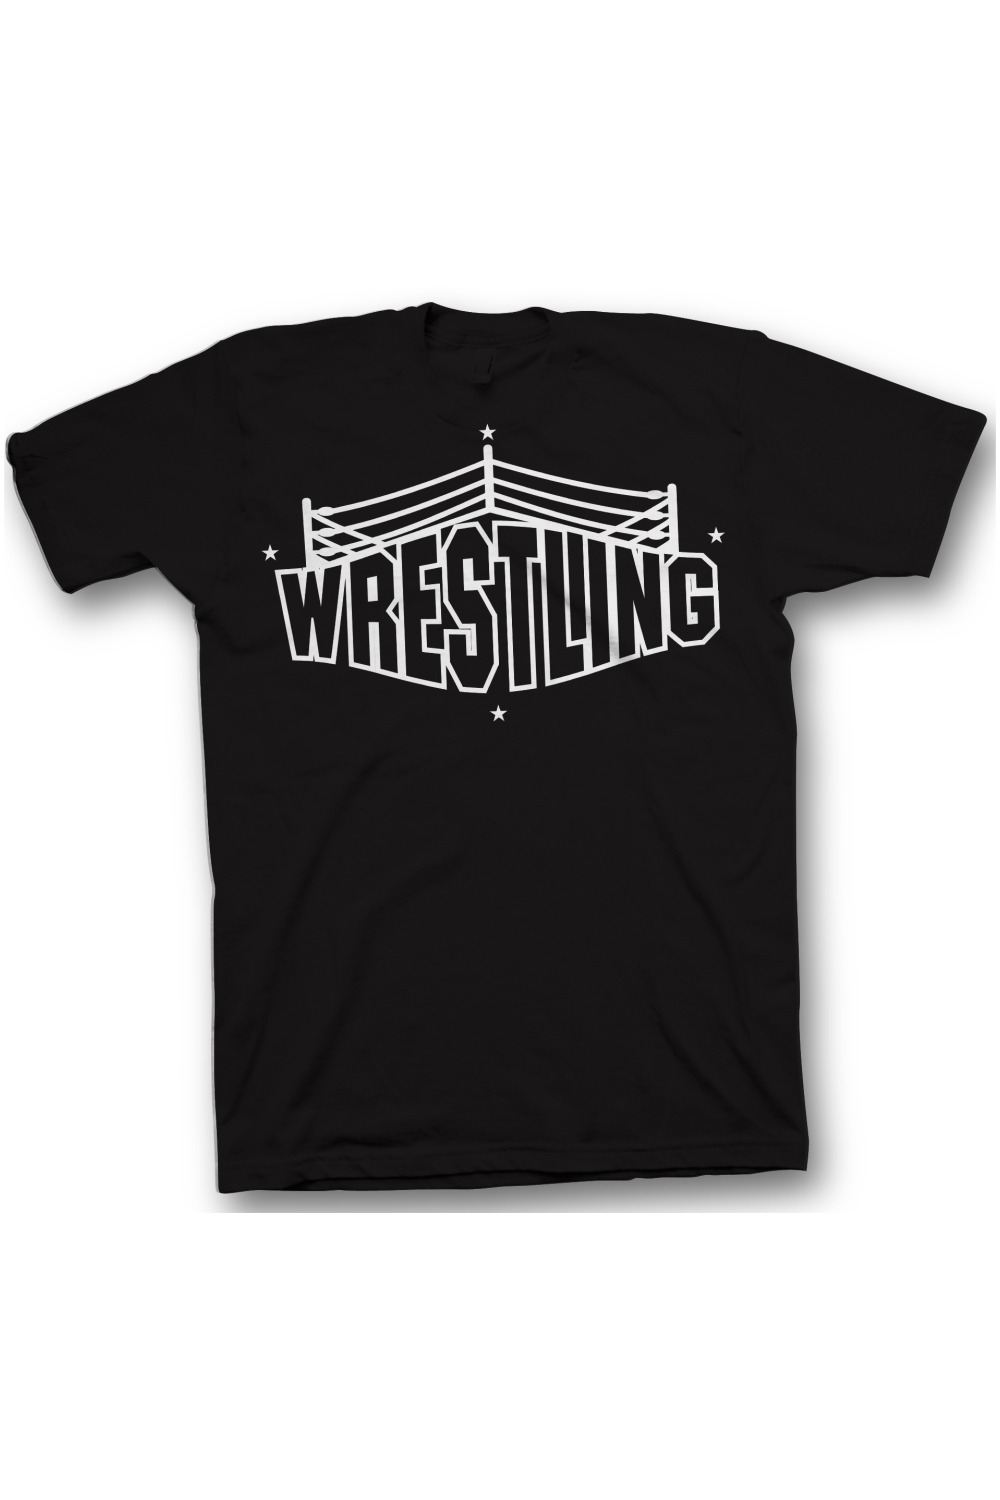 Sticker - SL-Wrestling - 80s Logo - SL-WRESTLING